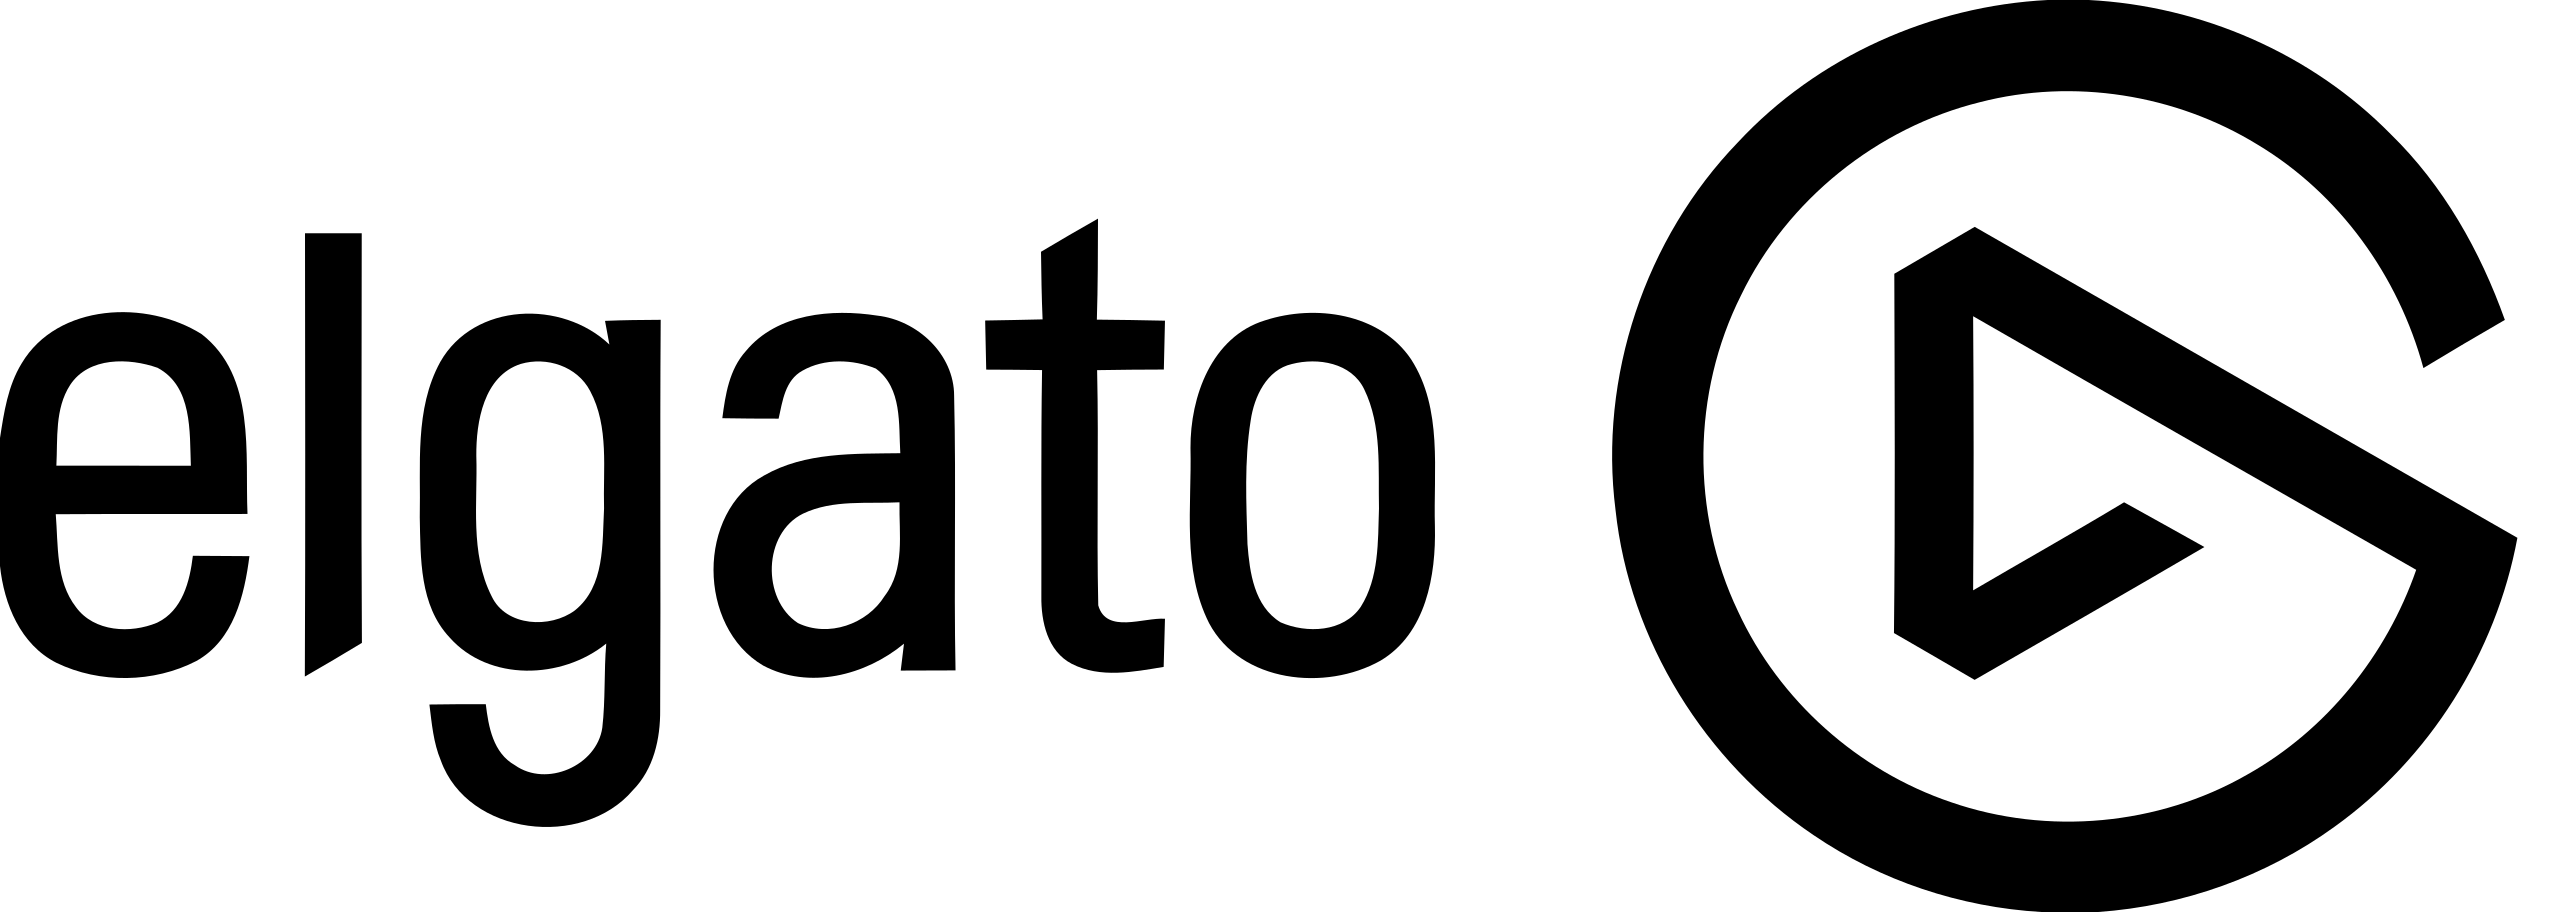 Эльгато. Elgato компания logo. Эльгато Нирава. Elgato распечатка. Selected full